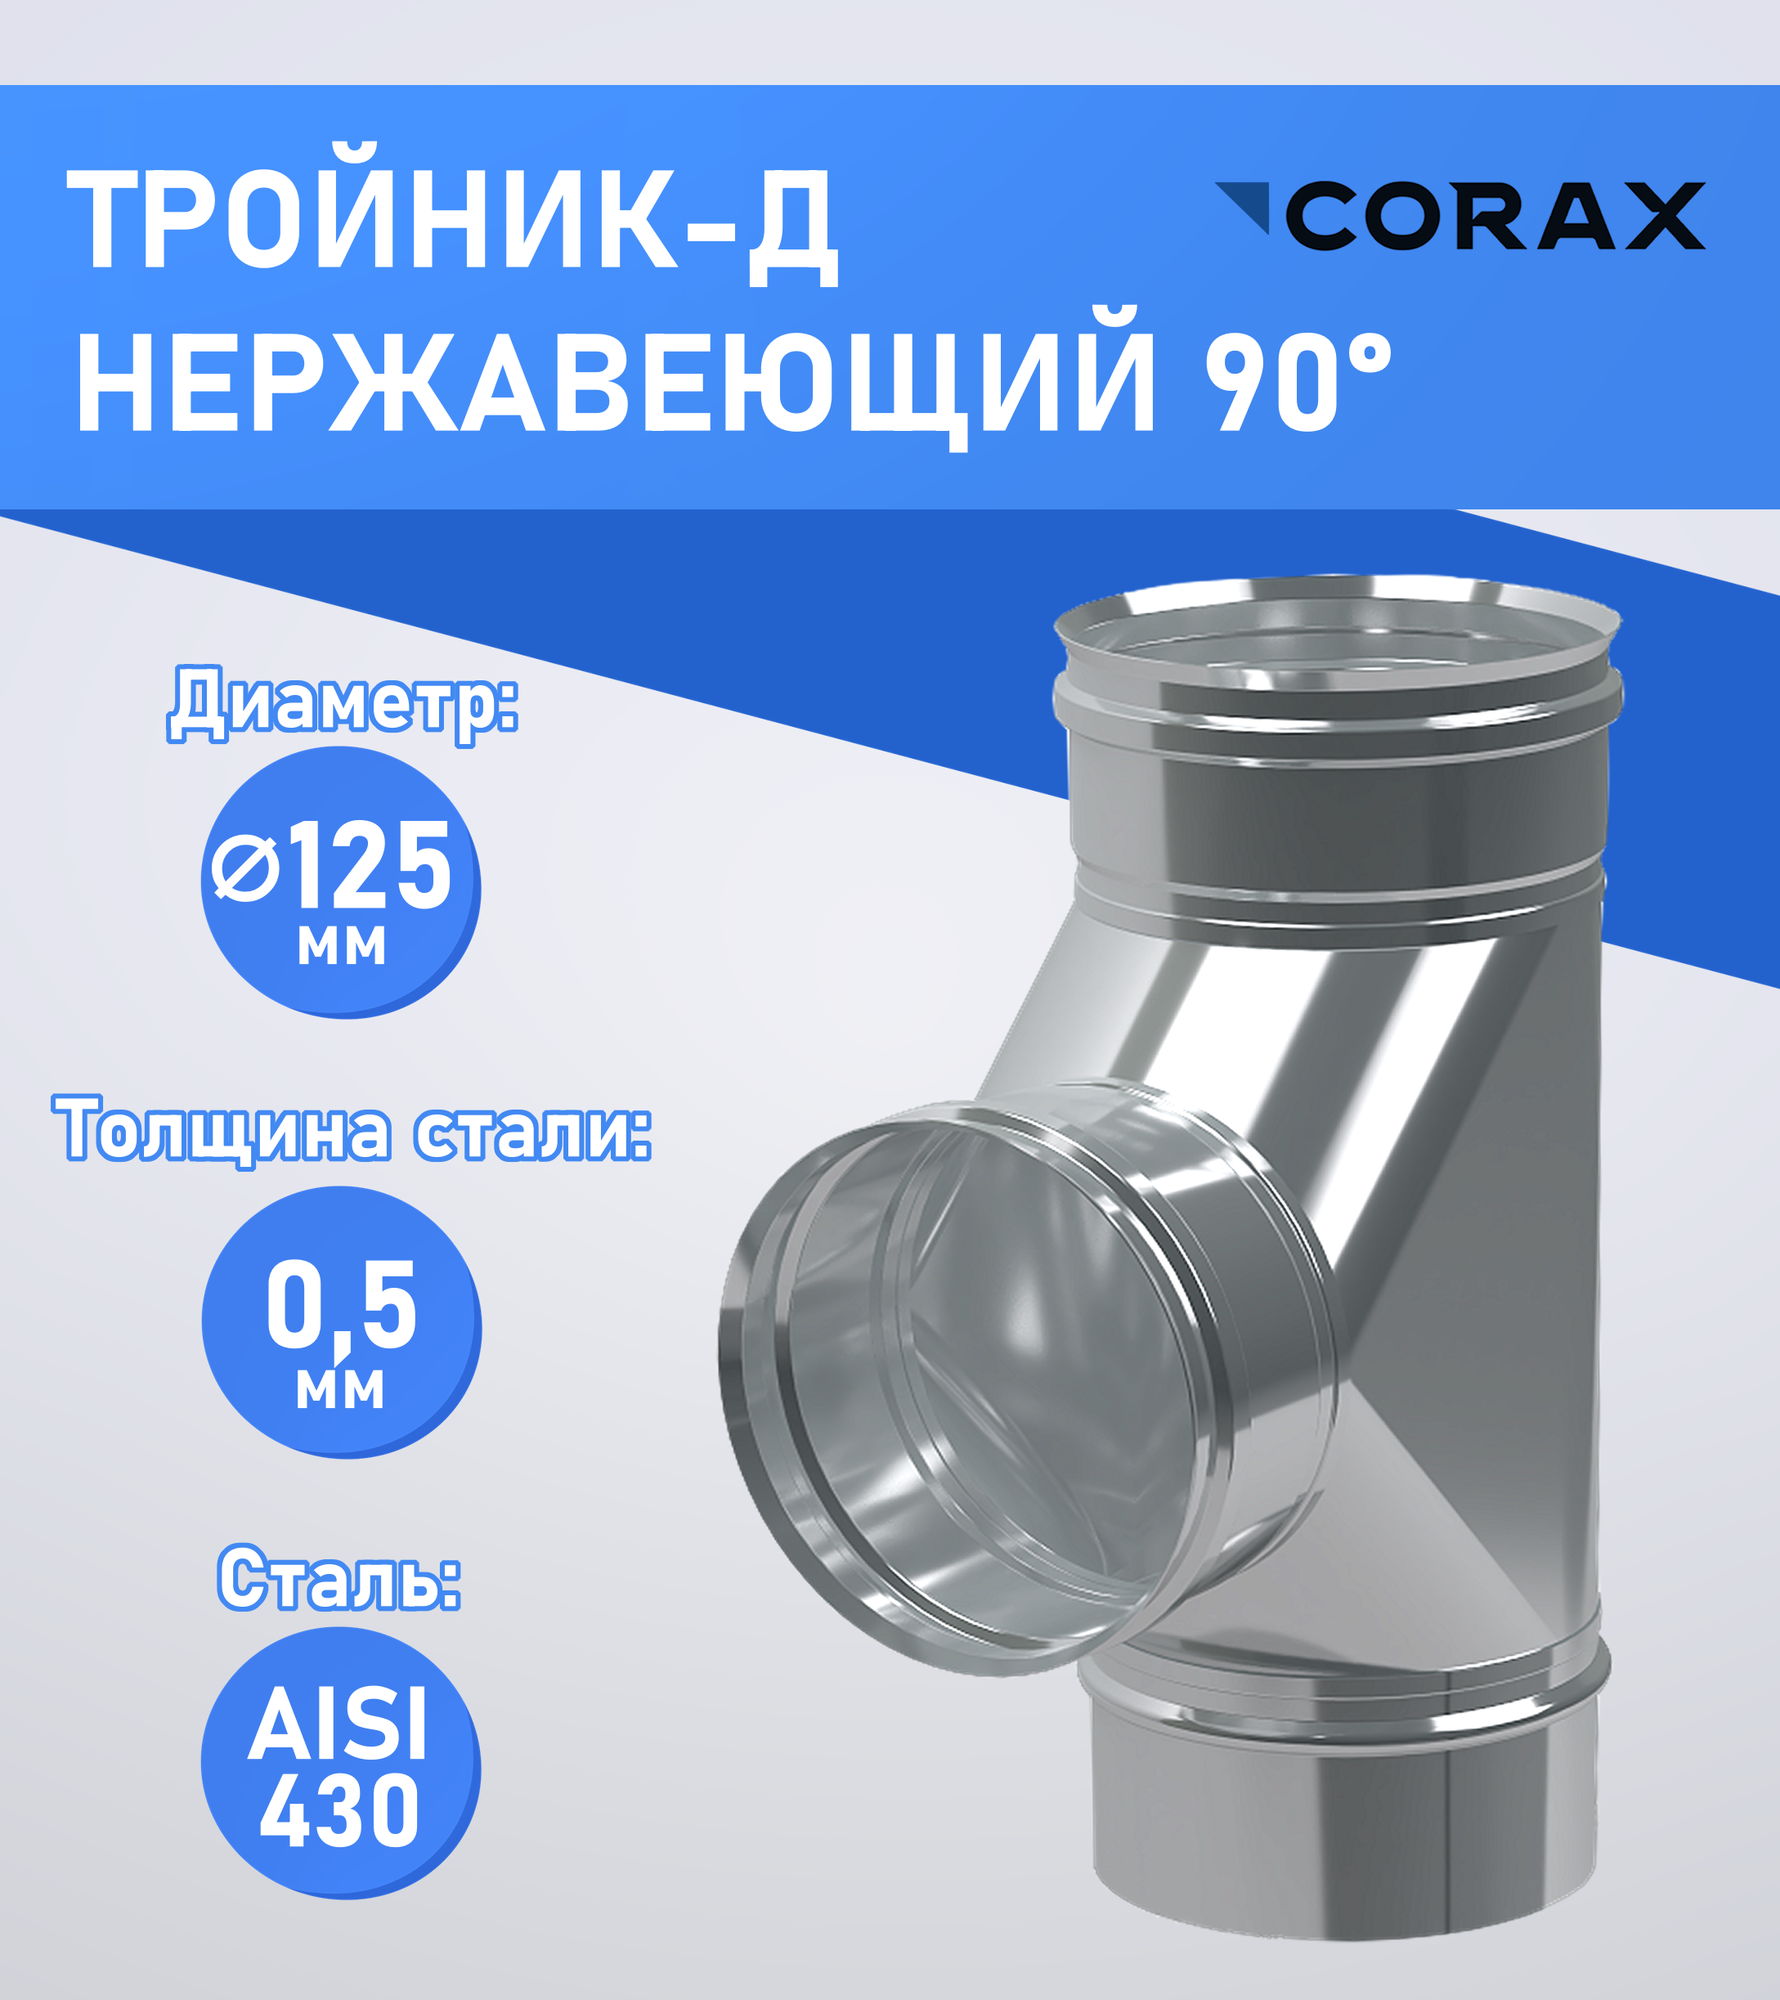 Тройник-Д 90* нержавеющий (430/0.5мм) Ф120 Corax